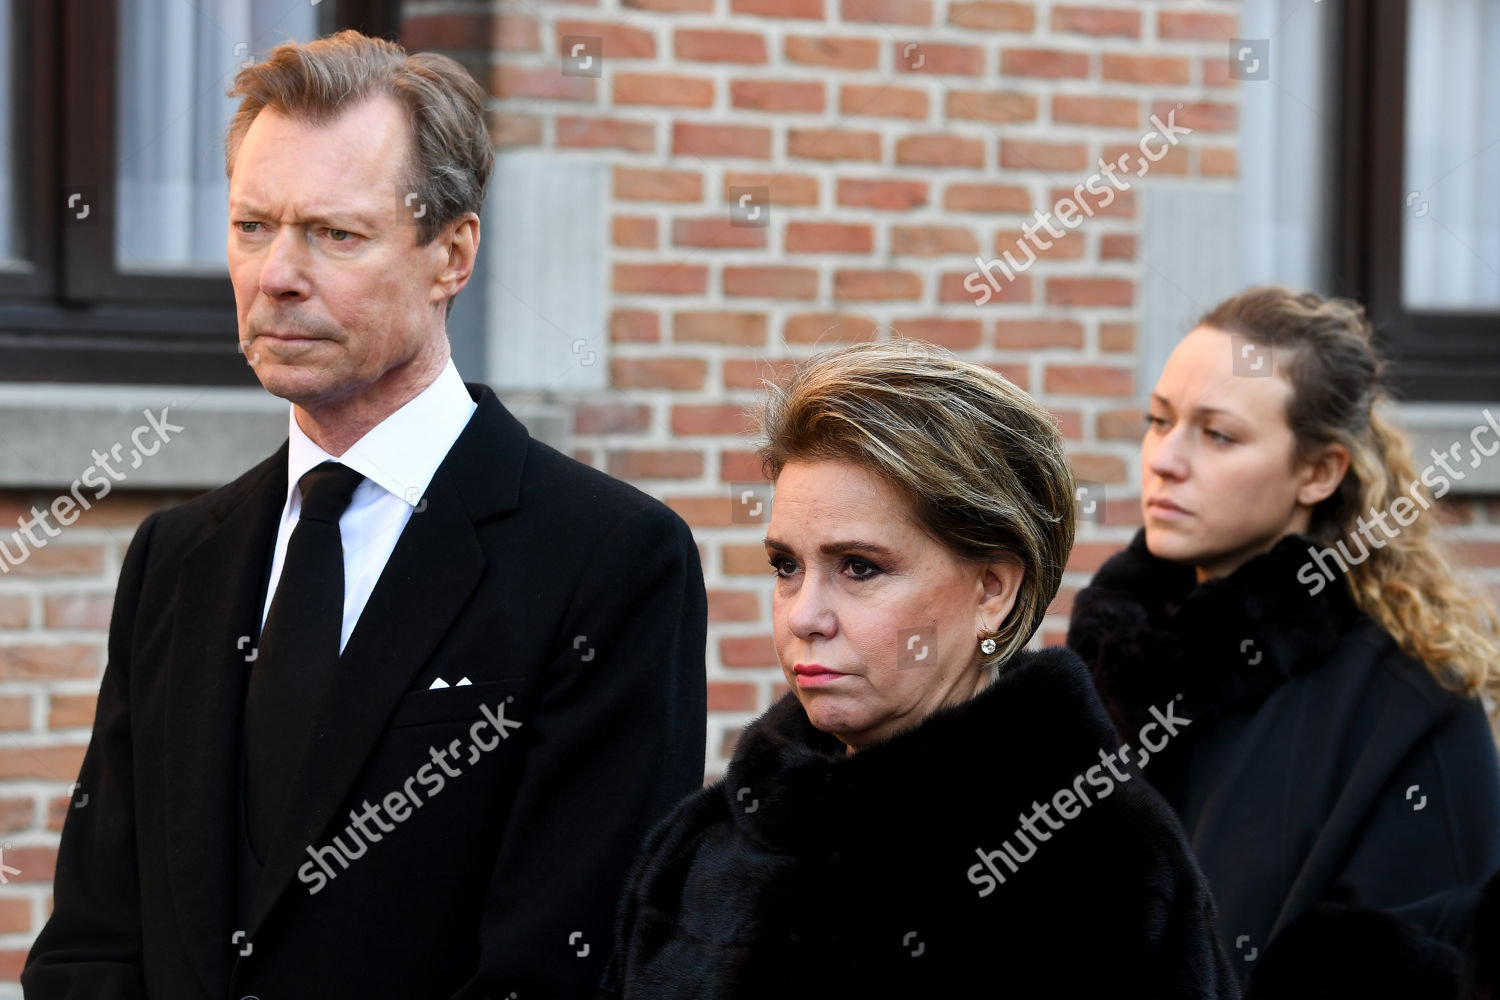 funeral-of-princess-alix-of-luxembourg-beloeil-belgium-shutterstock-editorial-10108462a.jpg